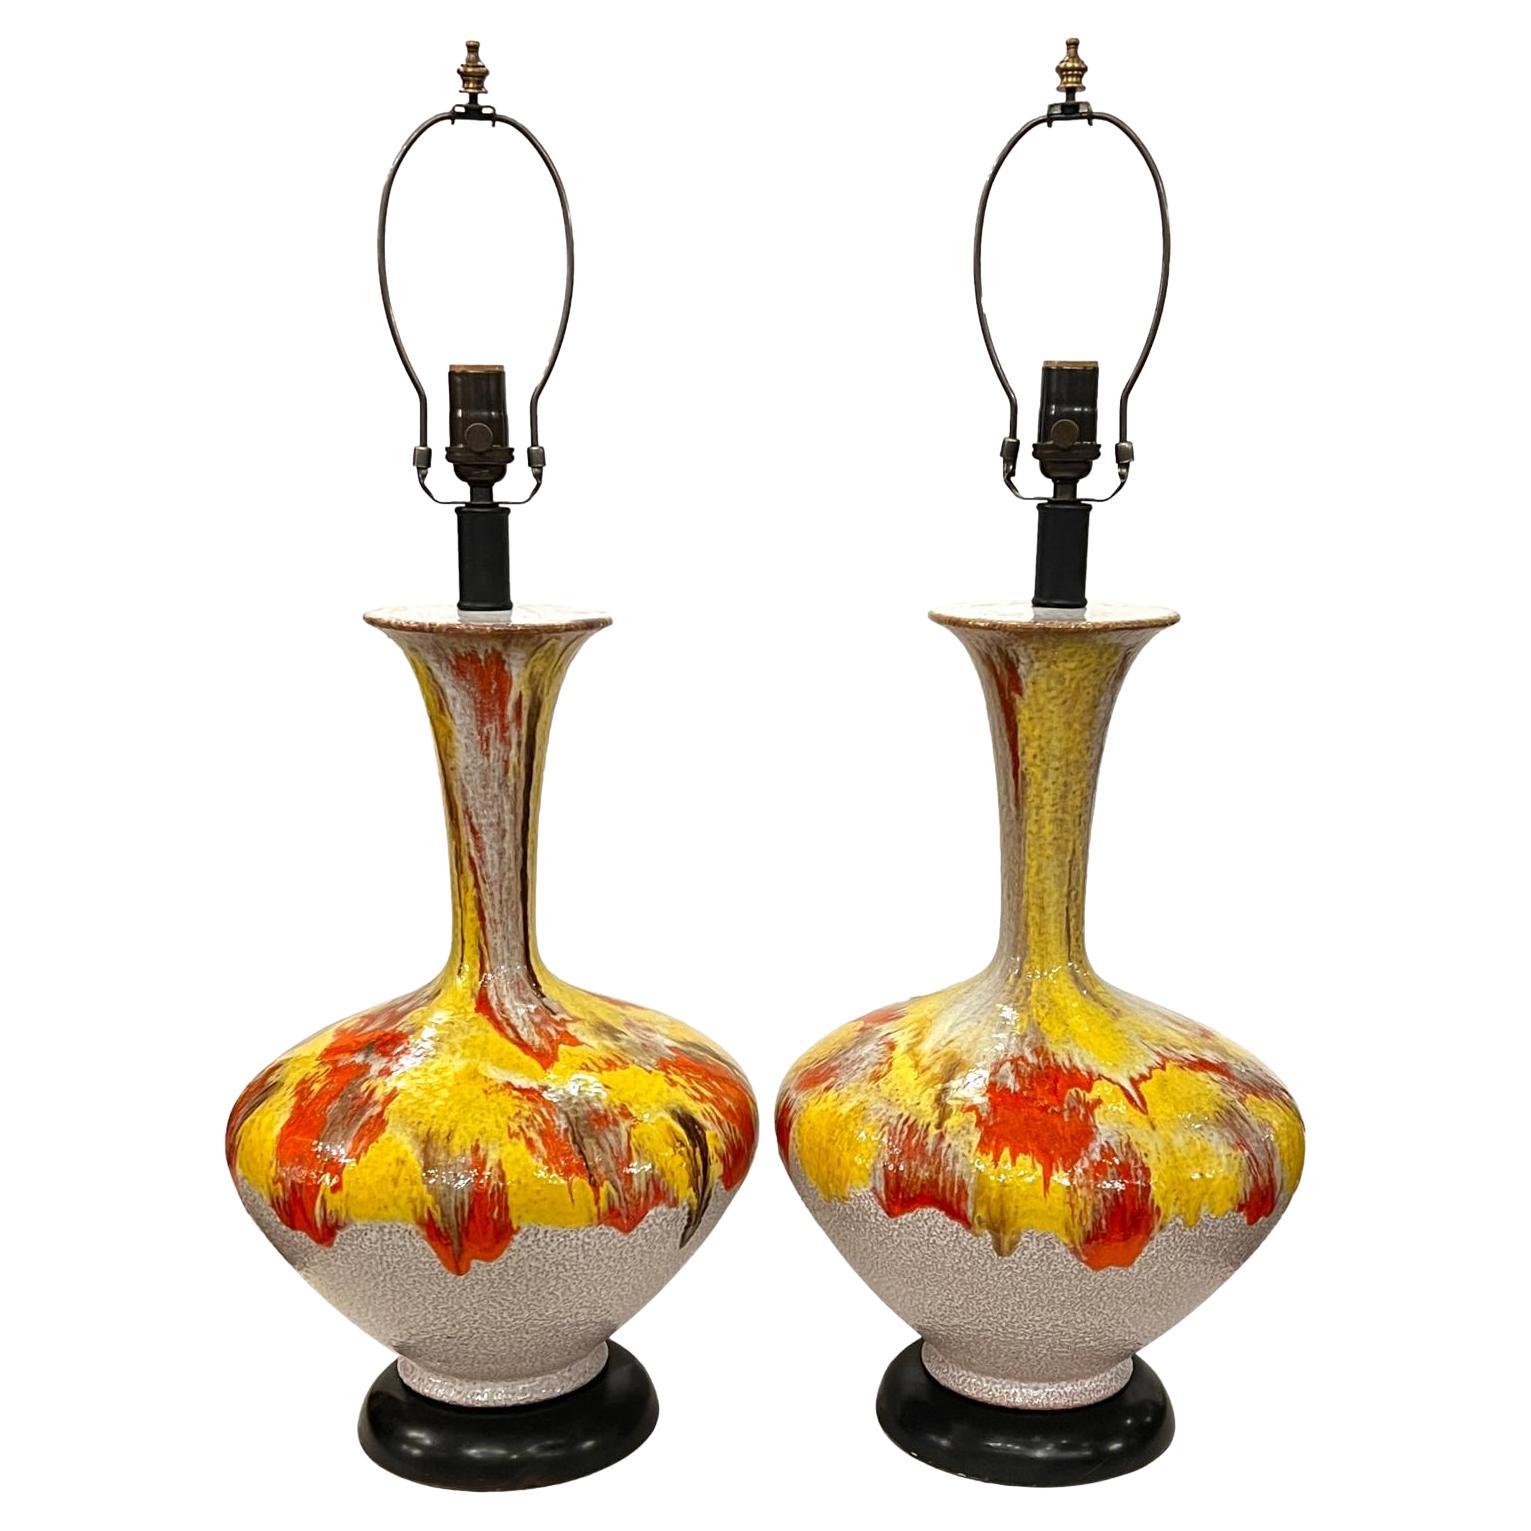 Pair of Midcentury Porcelain Lamps